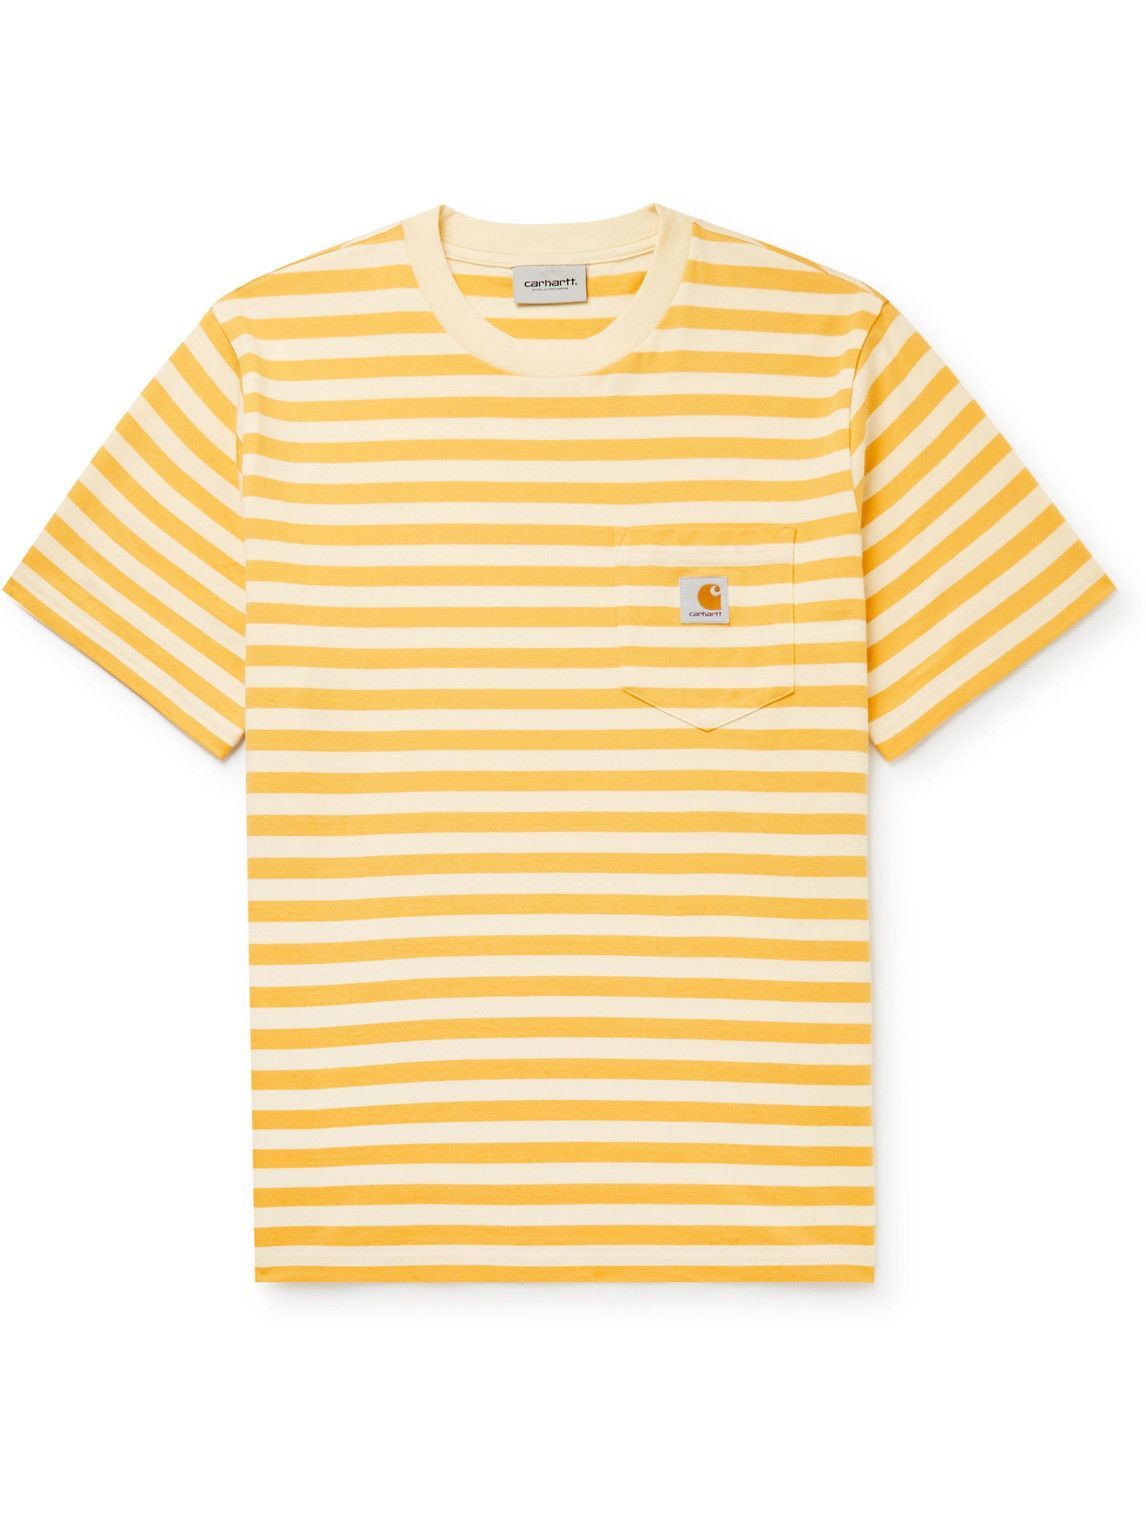 Carhartt WIP - Logo-Appliquéd Striped Cotton-Jersey T-Shirt - Yellow ...